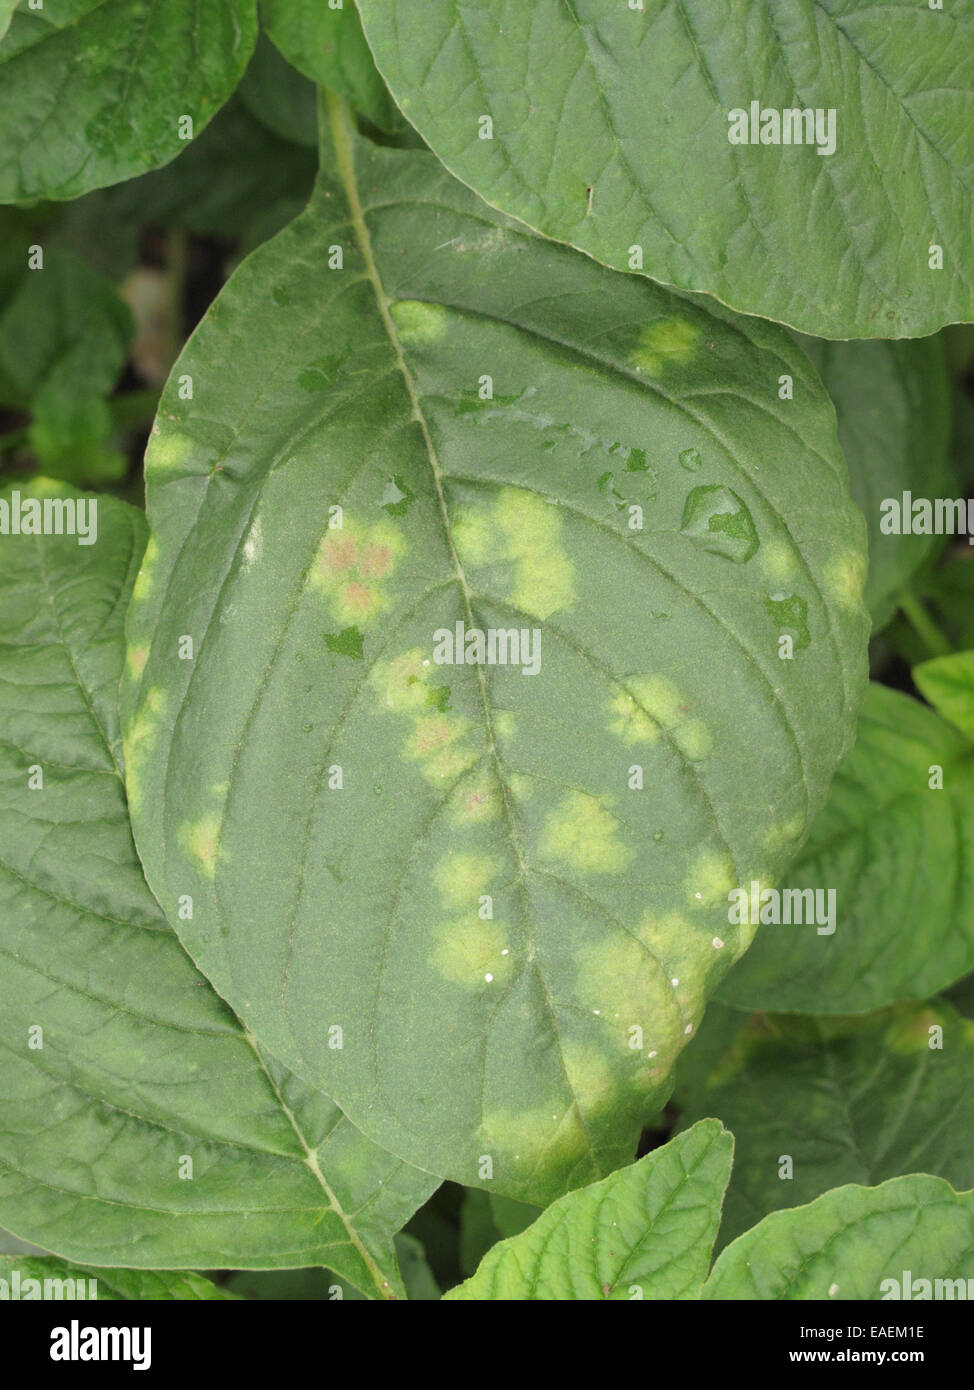 White rust, Albugo bliti, blisters on the upper surface of amaranth or pigweed leaves, Amaranthus retroflexus, Stock Photo